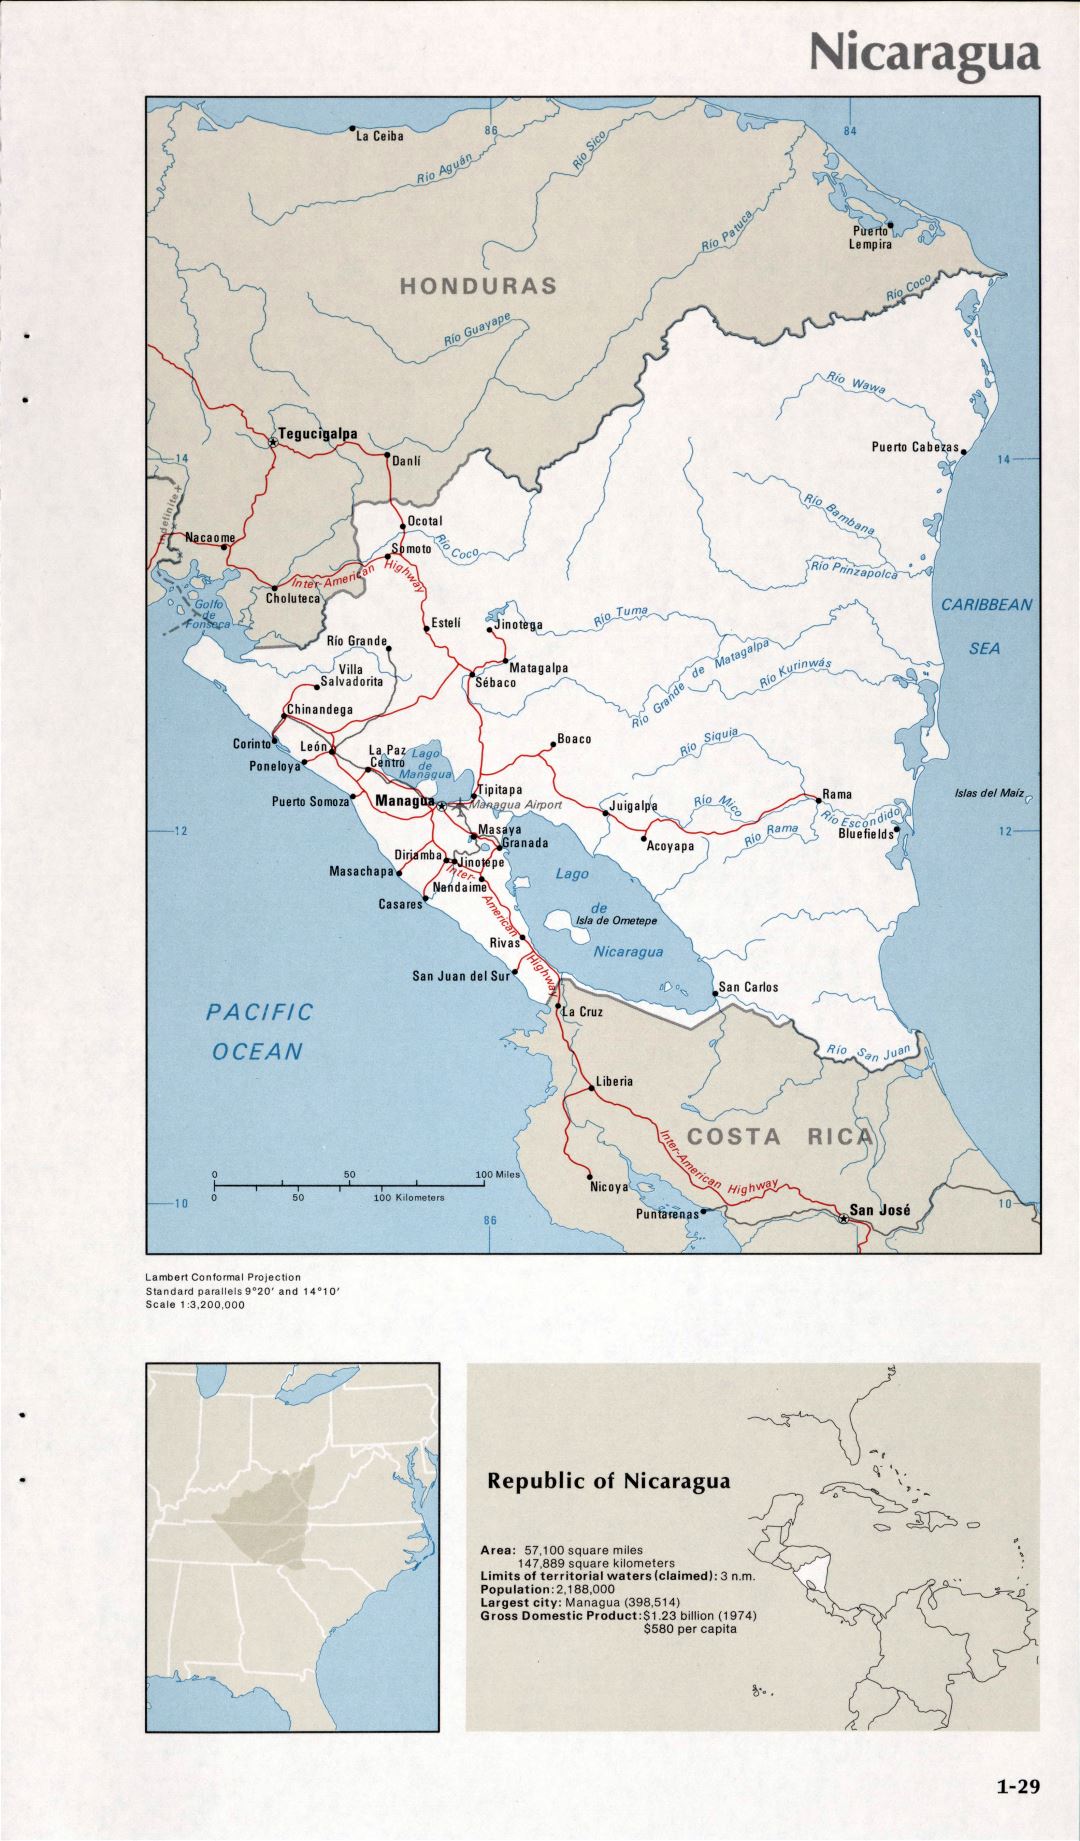 Map of Nicaragua (1-29)